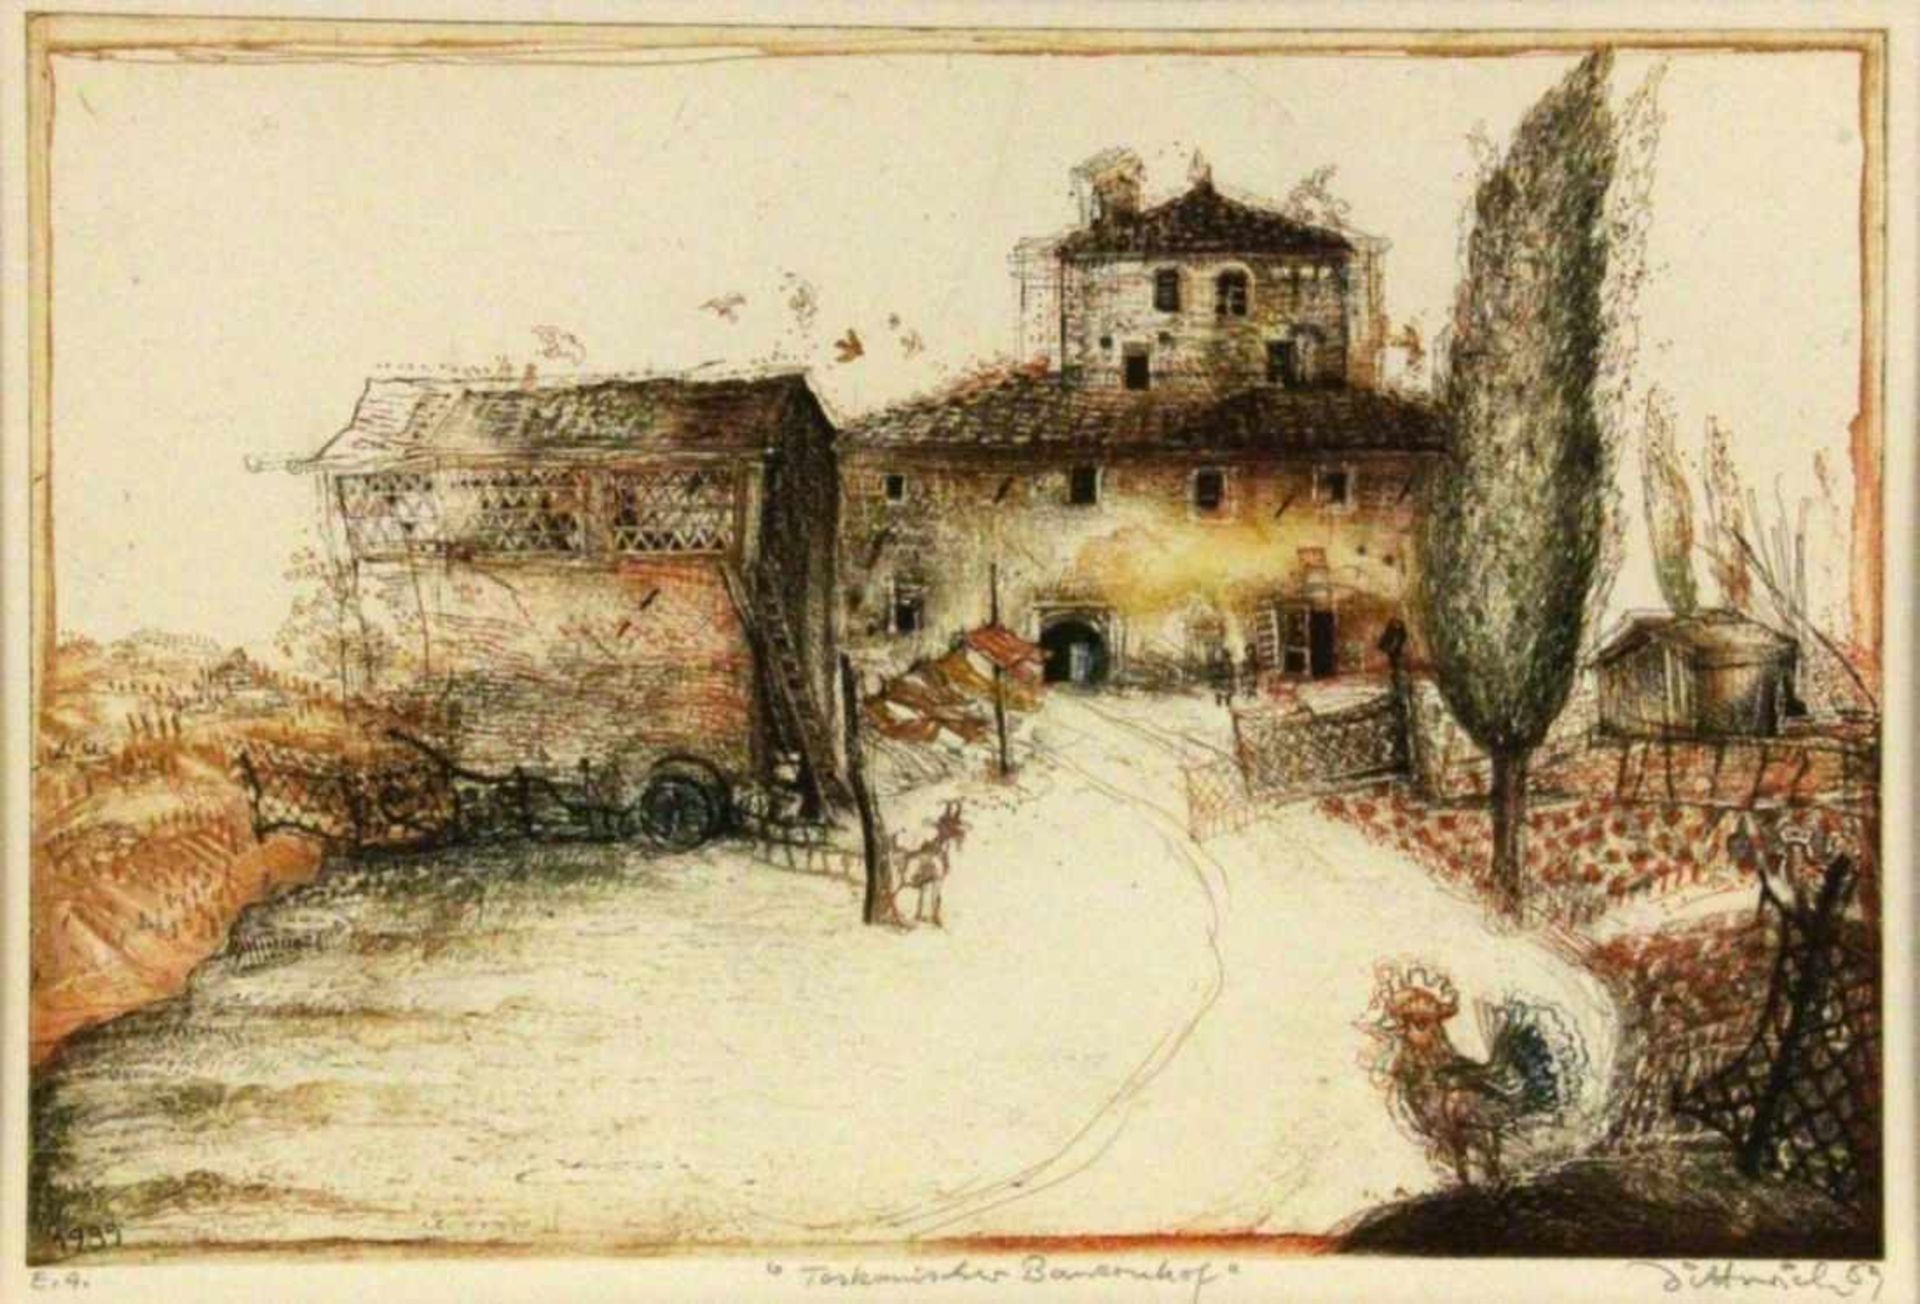 DITTRICH, SIMON Teplitz-Schönau 1940 Tuscan Farm. Coloured etching. Hand signed, titledand dated: (